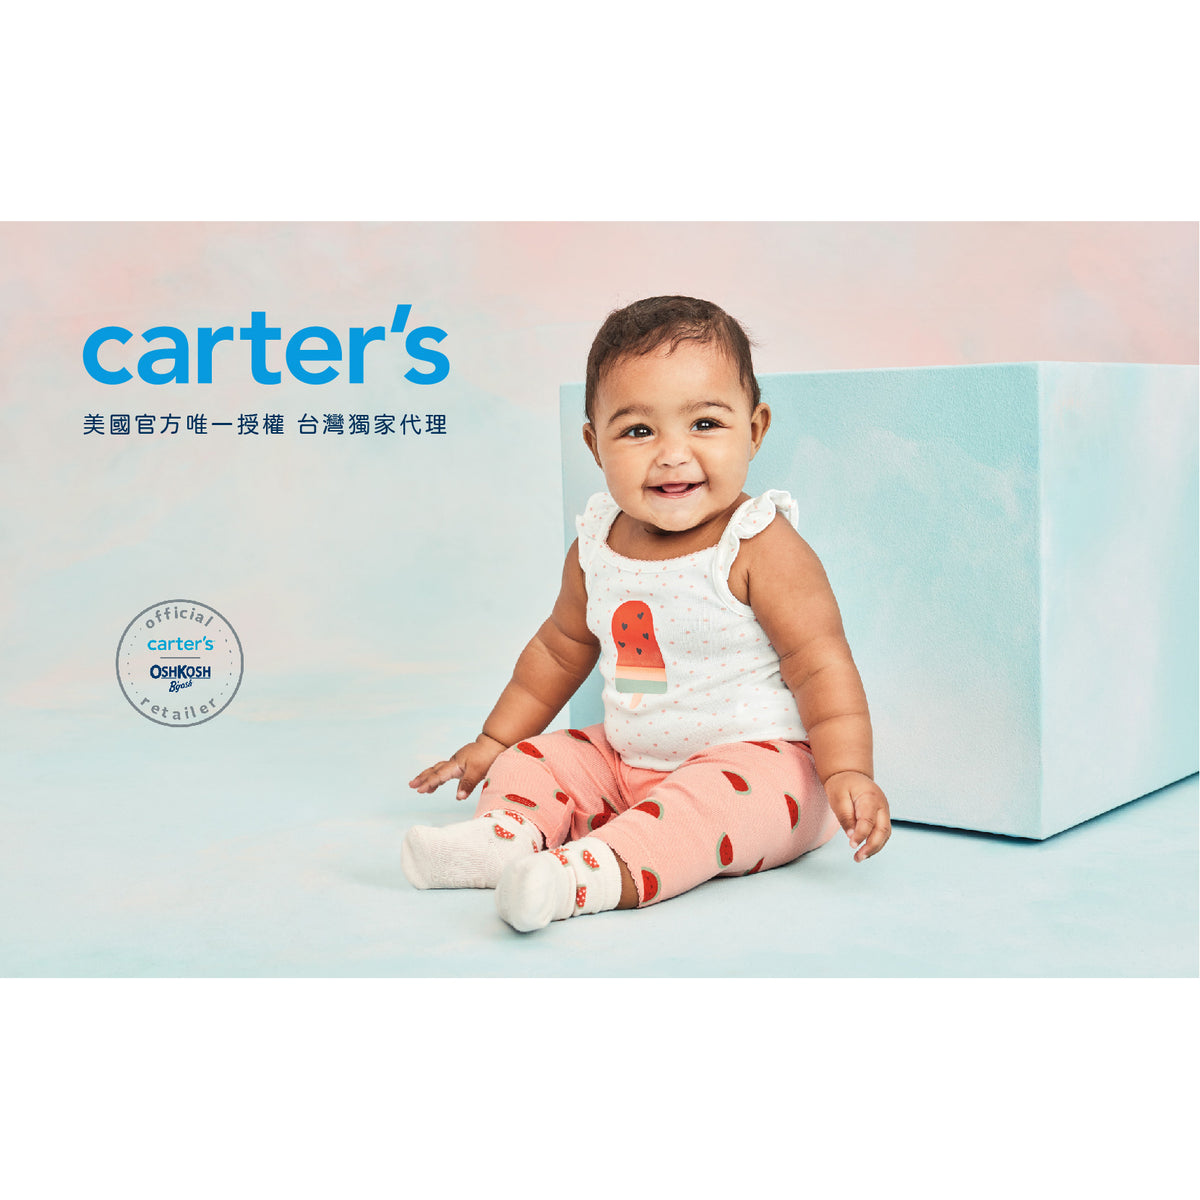 Carter's 藍天茉莉花3件組套裝(6M-24M)